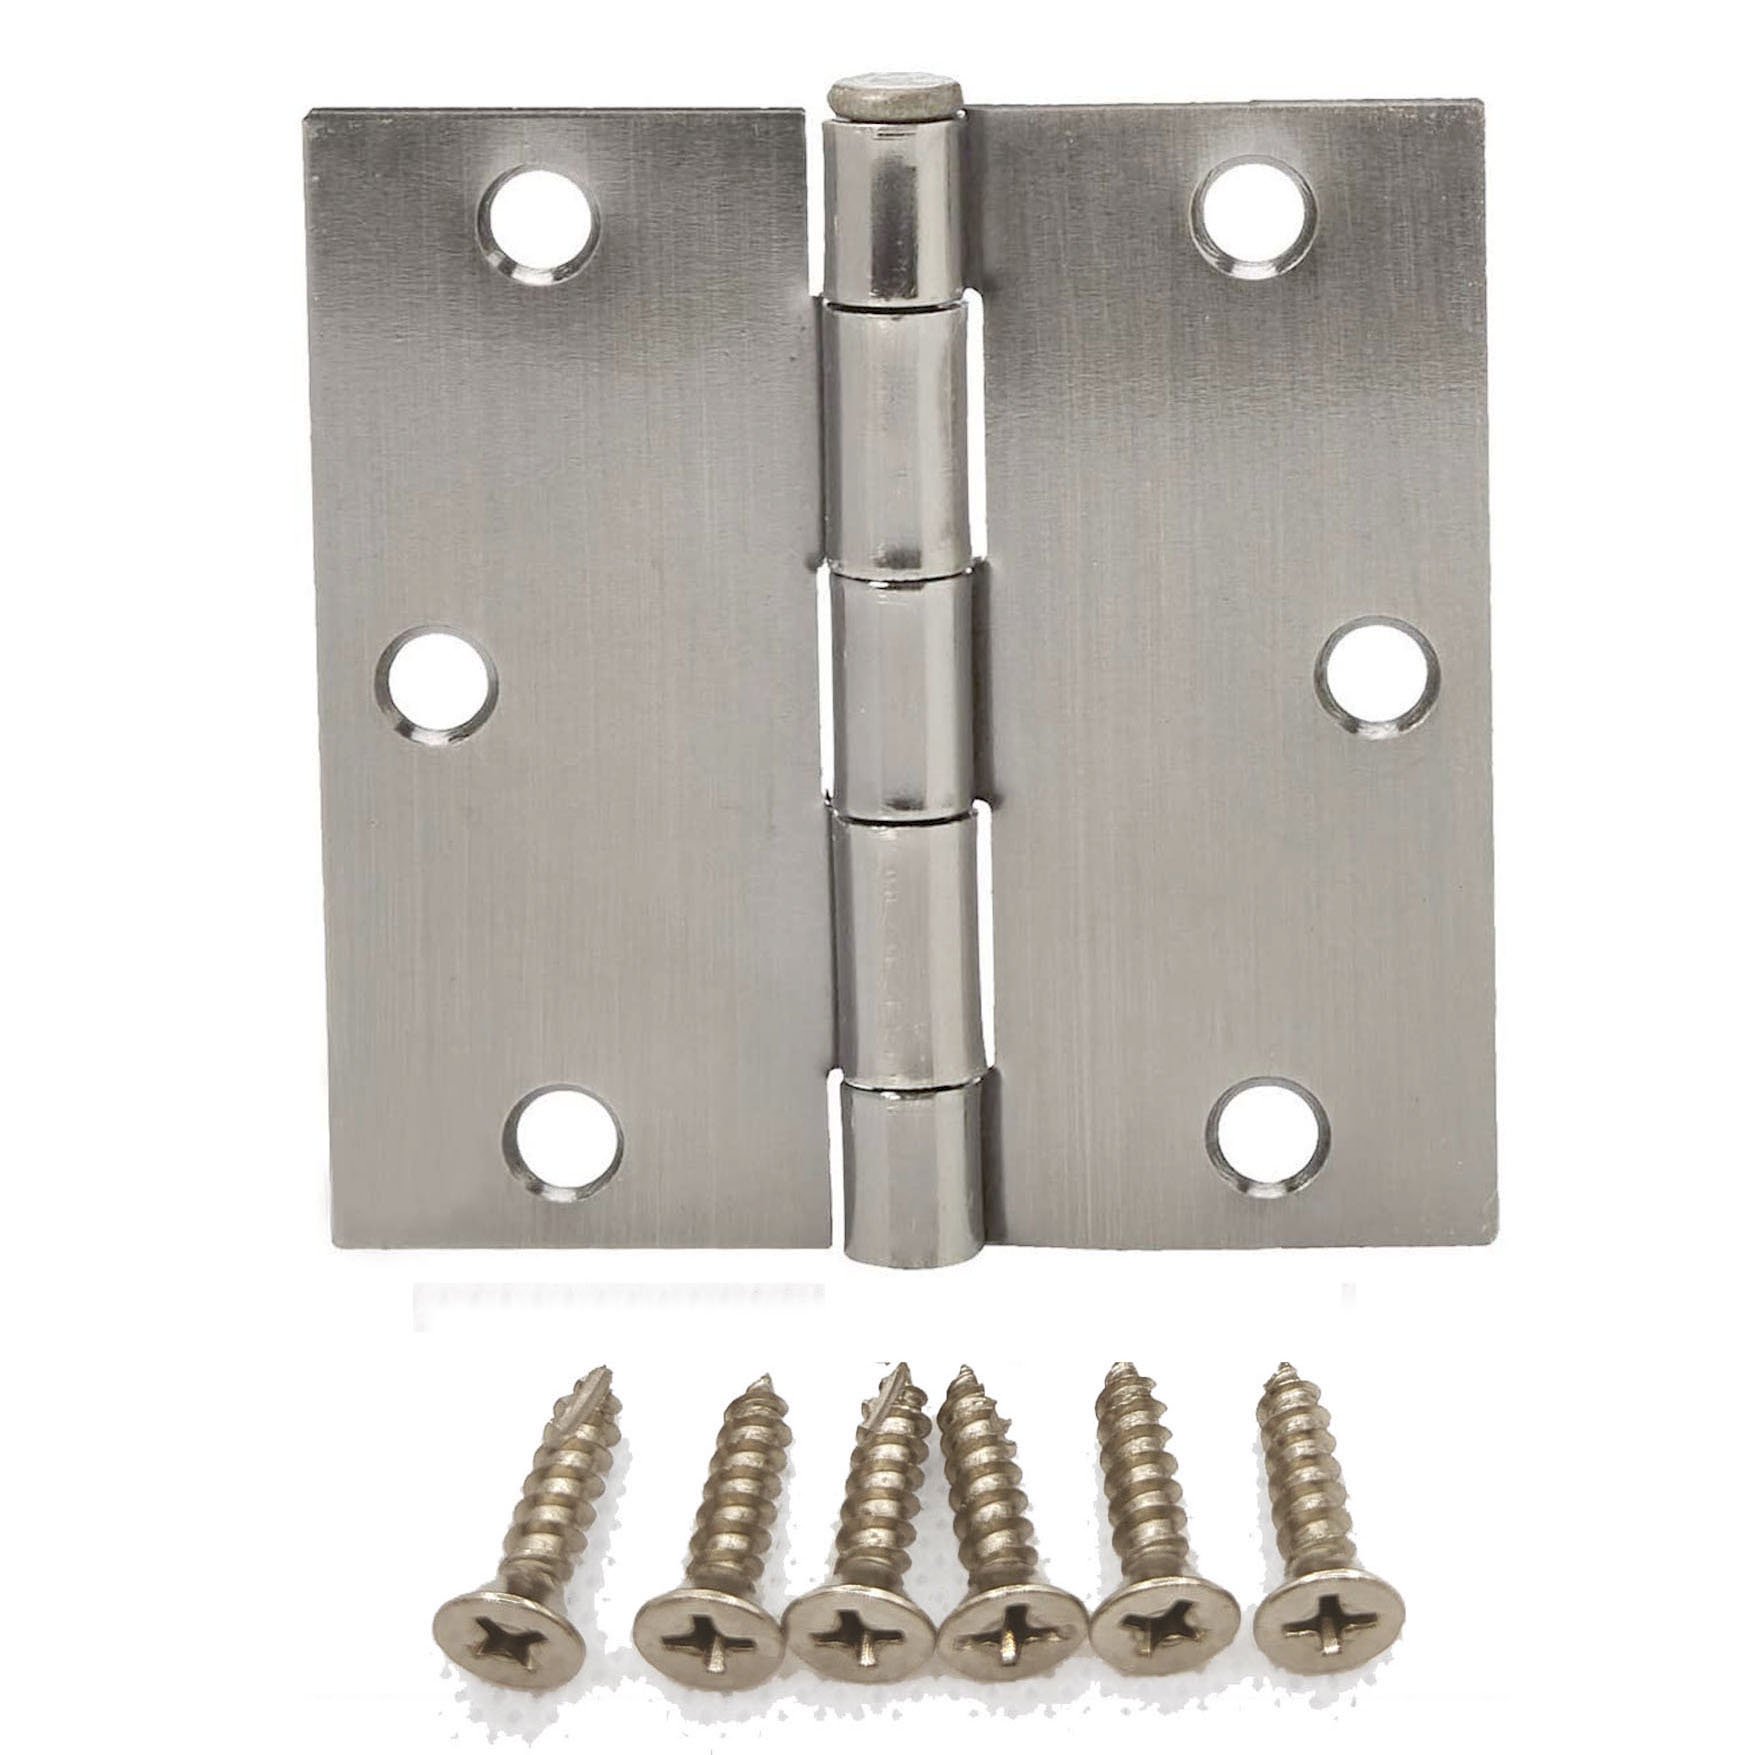 100 PACKS 3.5IN Steel Door Hinge Heavy Duty for Interior & Exterior Door, Square Corner,Thickness:2.2mm,Satin Nickel,Removable pin, with Screws - image 1 of 5